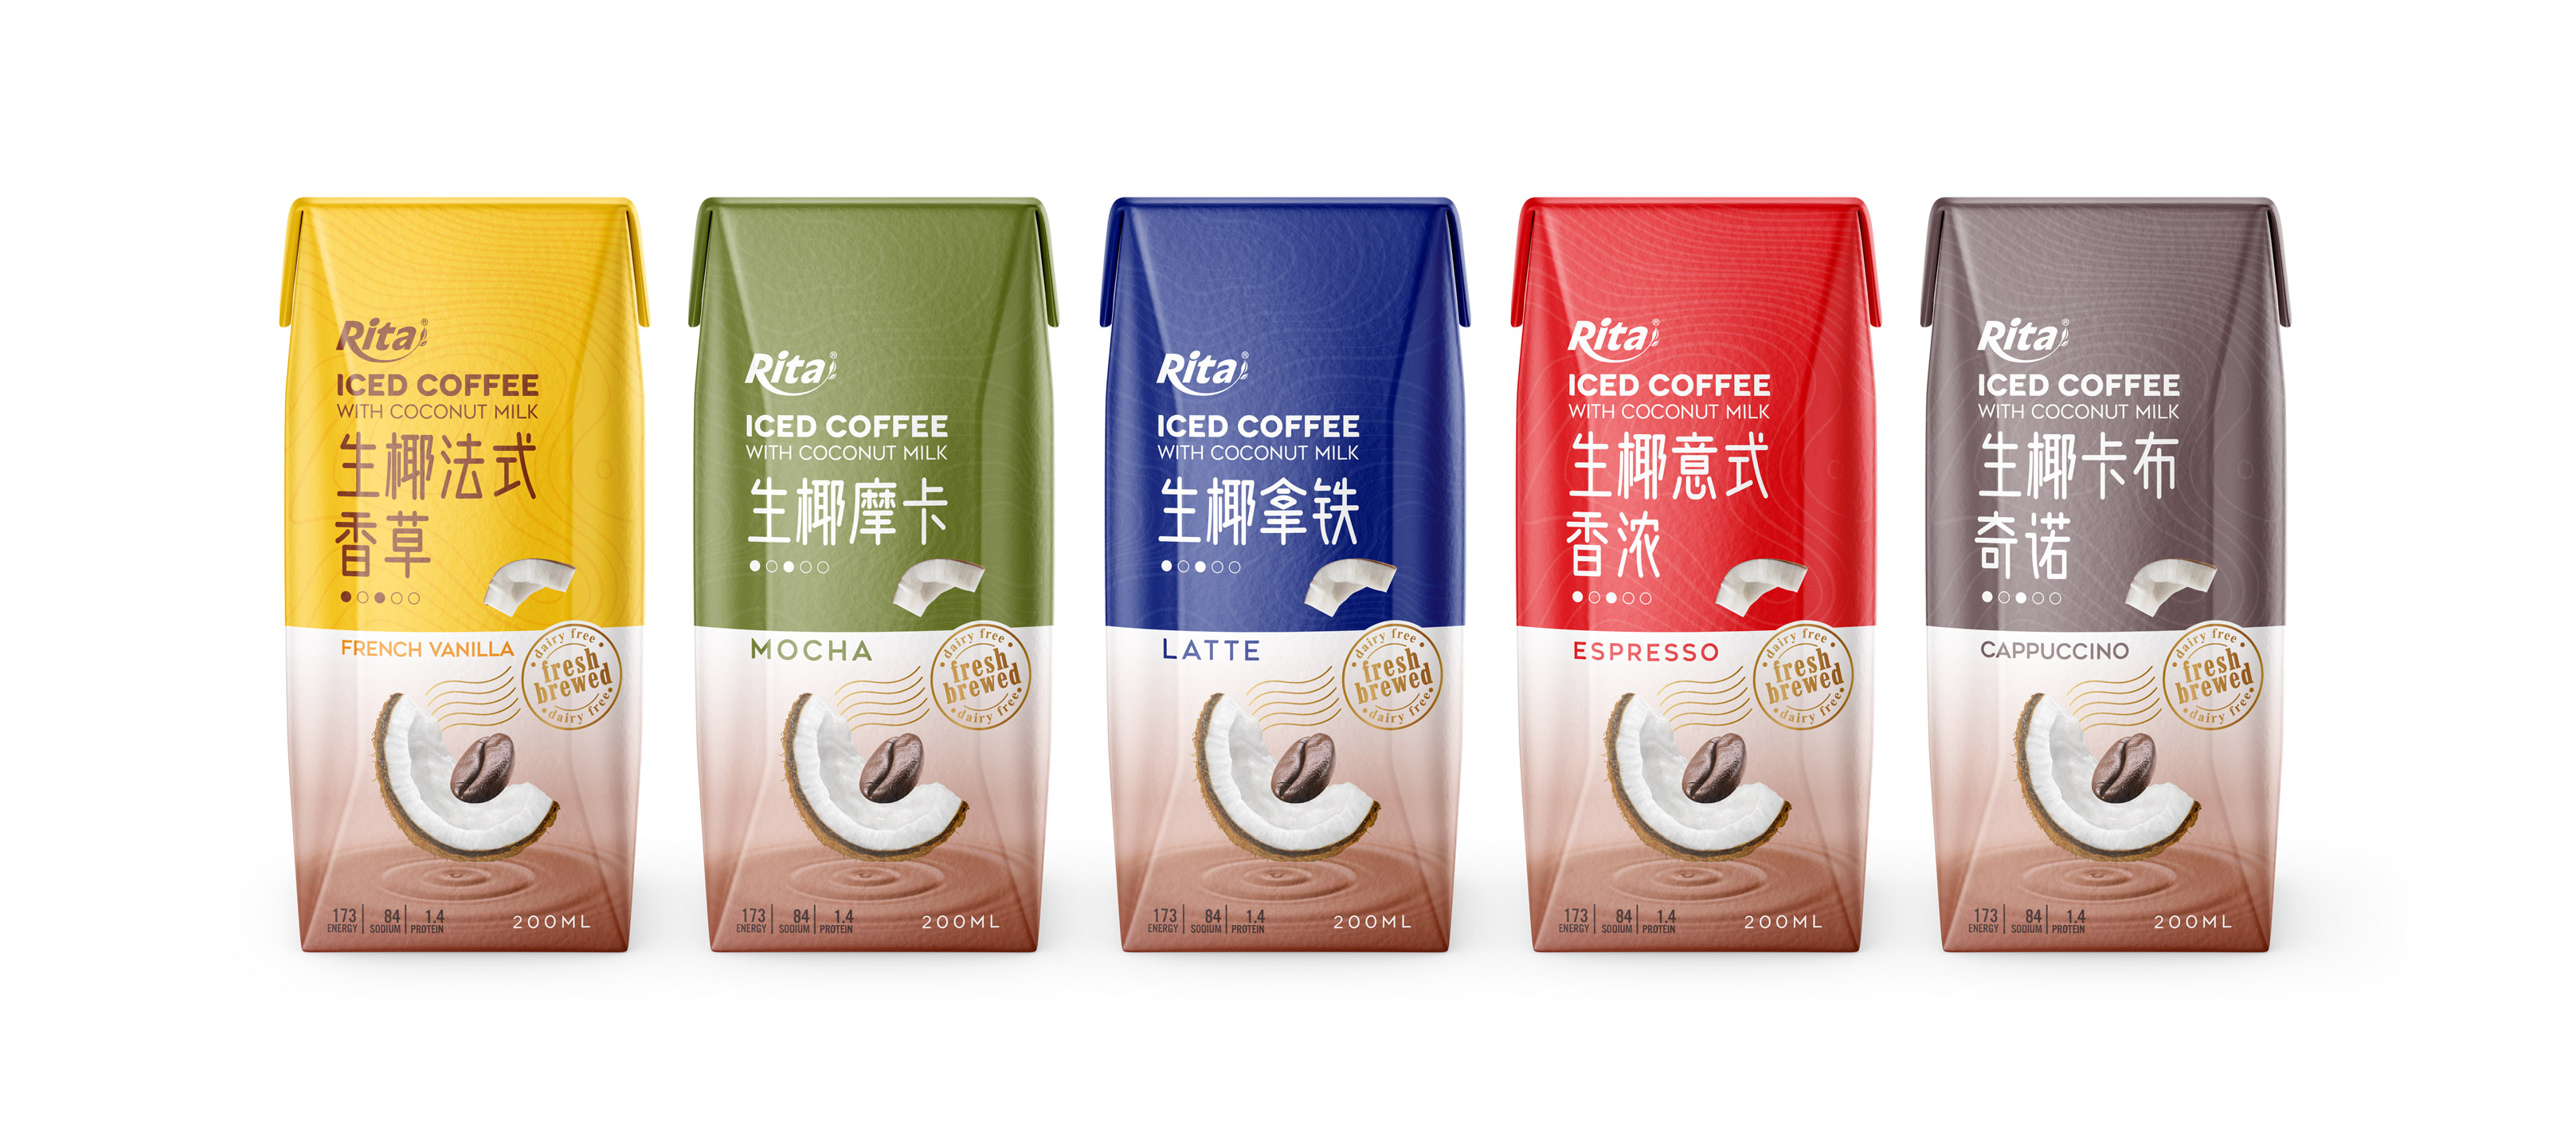 iced coffee coconut milk 200ml own brand